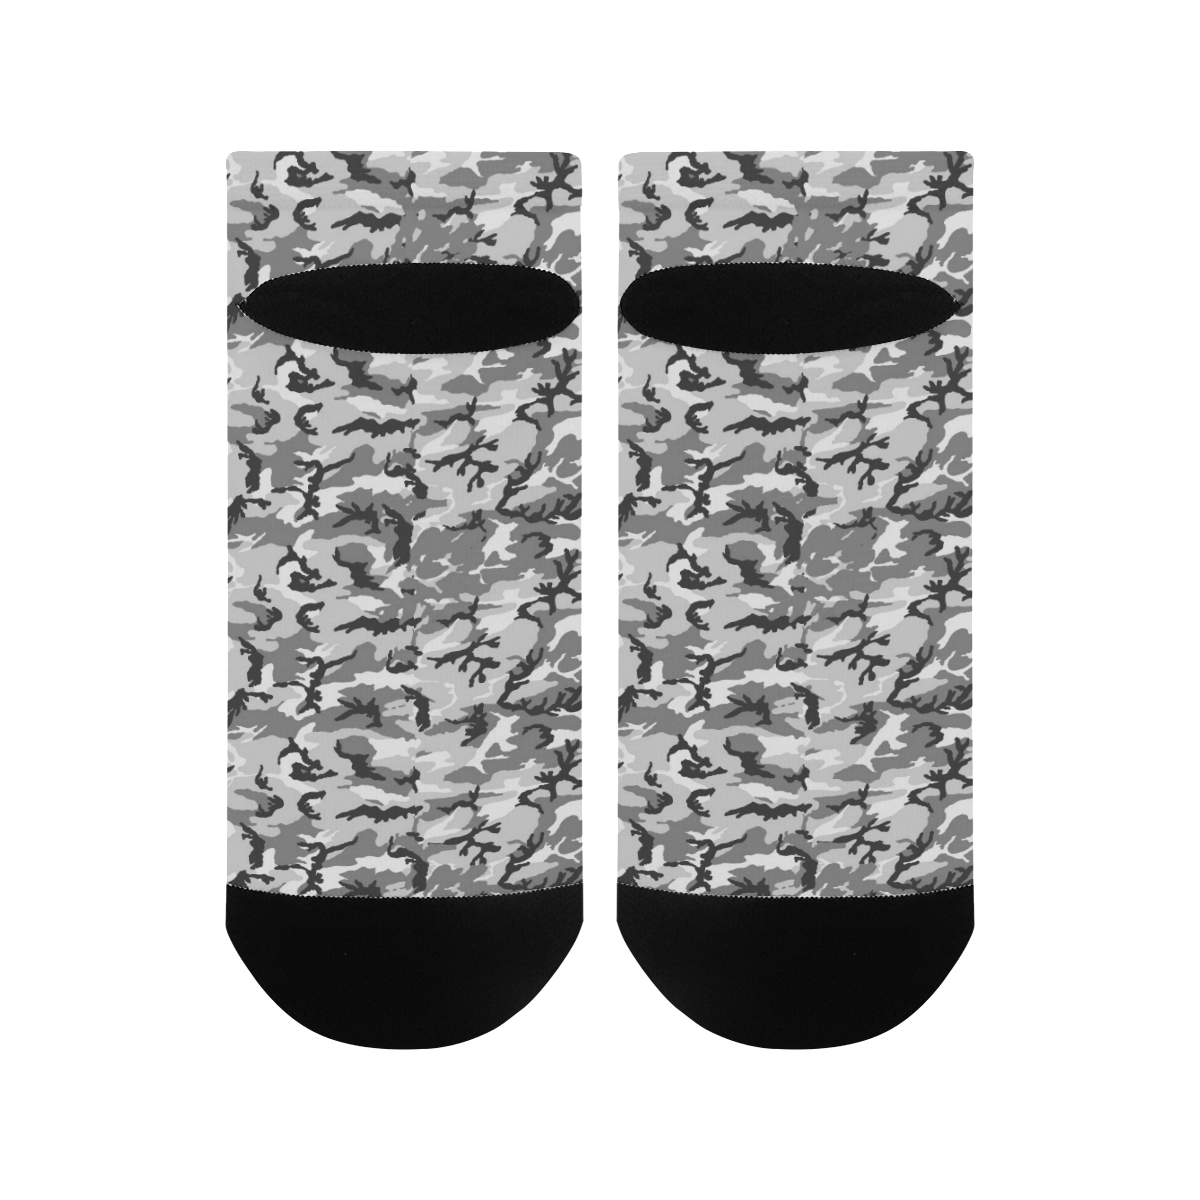 Woodland Urban City Black/Gray Camouflage Men's Ankle Socks